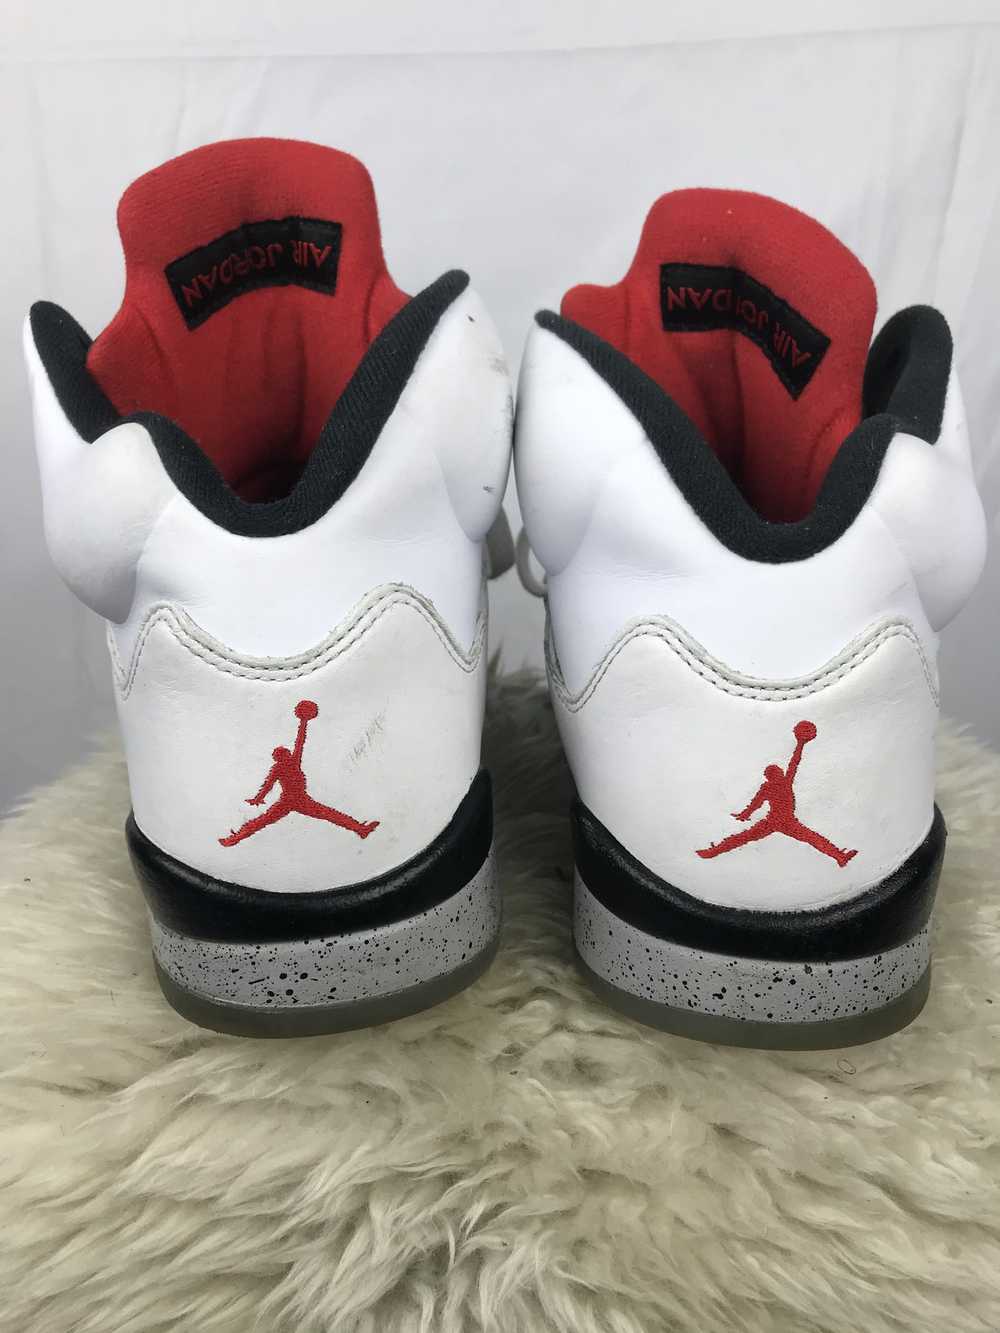 Jordan Brand Air Jordan 5 Retro White Cement 2017 - image 6